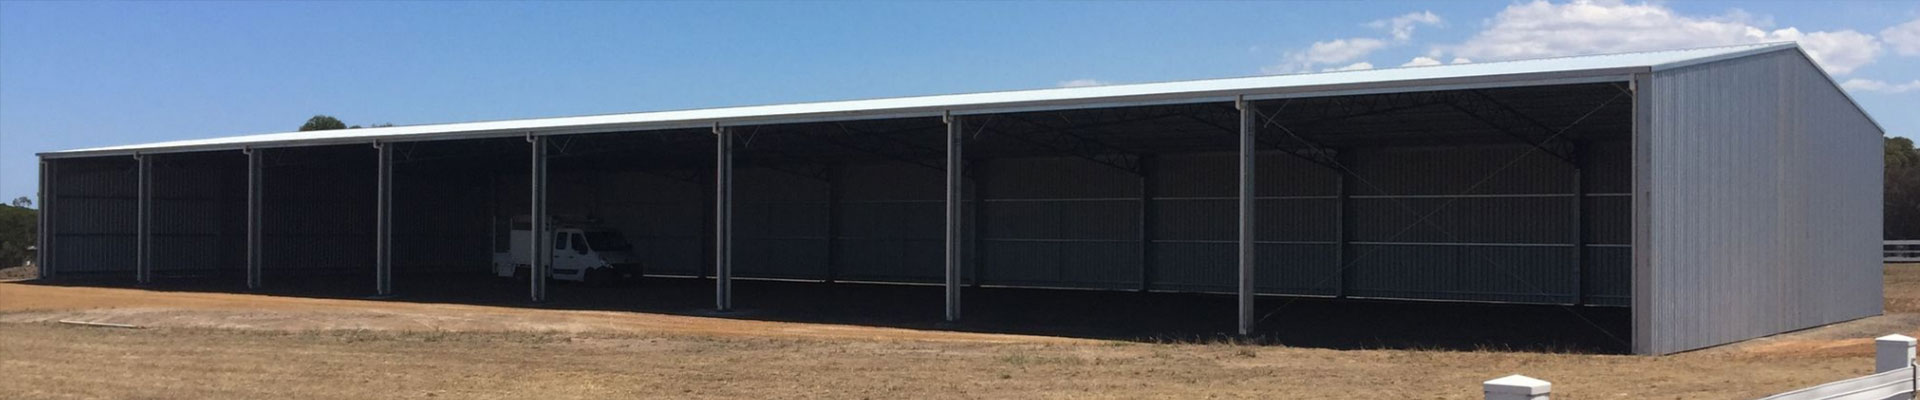 Quality Rural Sheds Melbourne | Farm & Machinery Storage